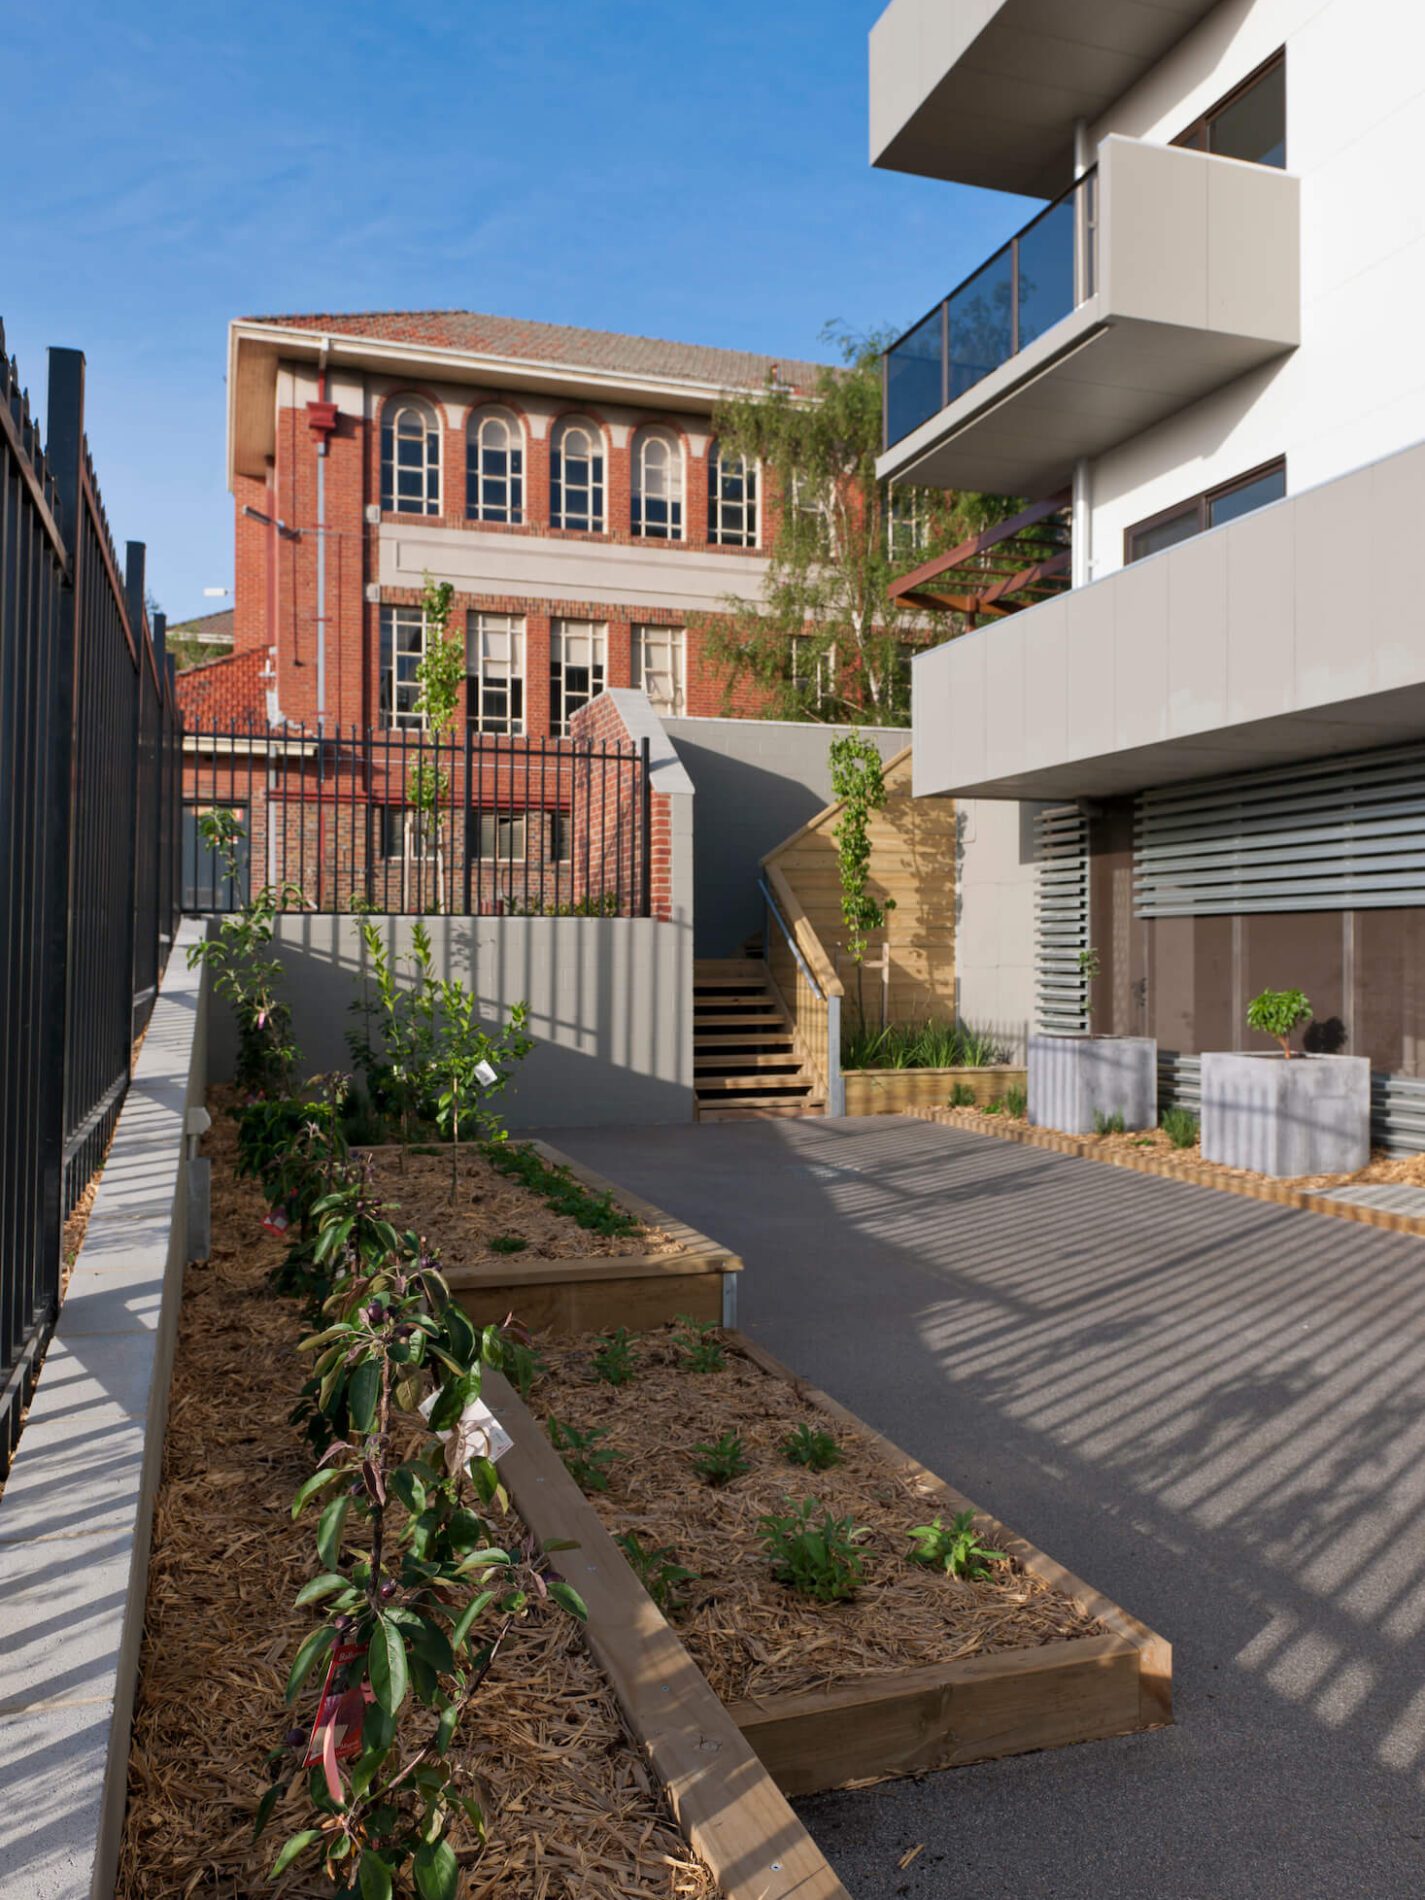 Landscaped courtyard garden below new apartments